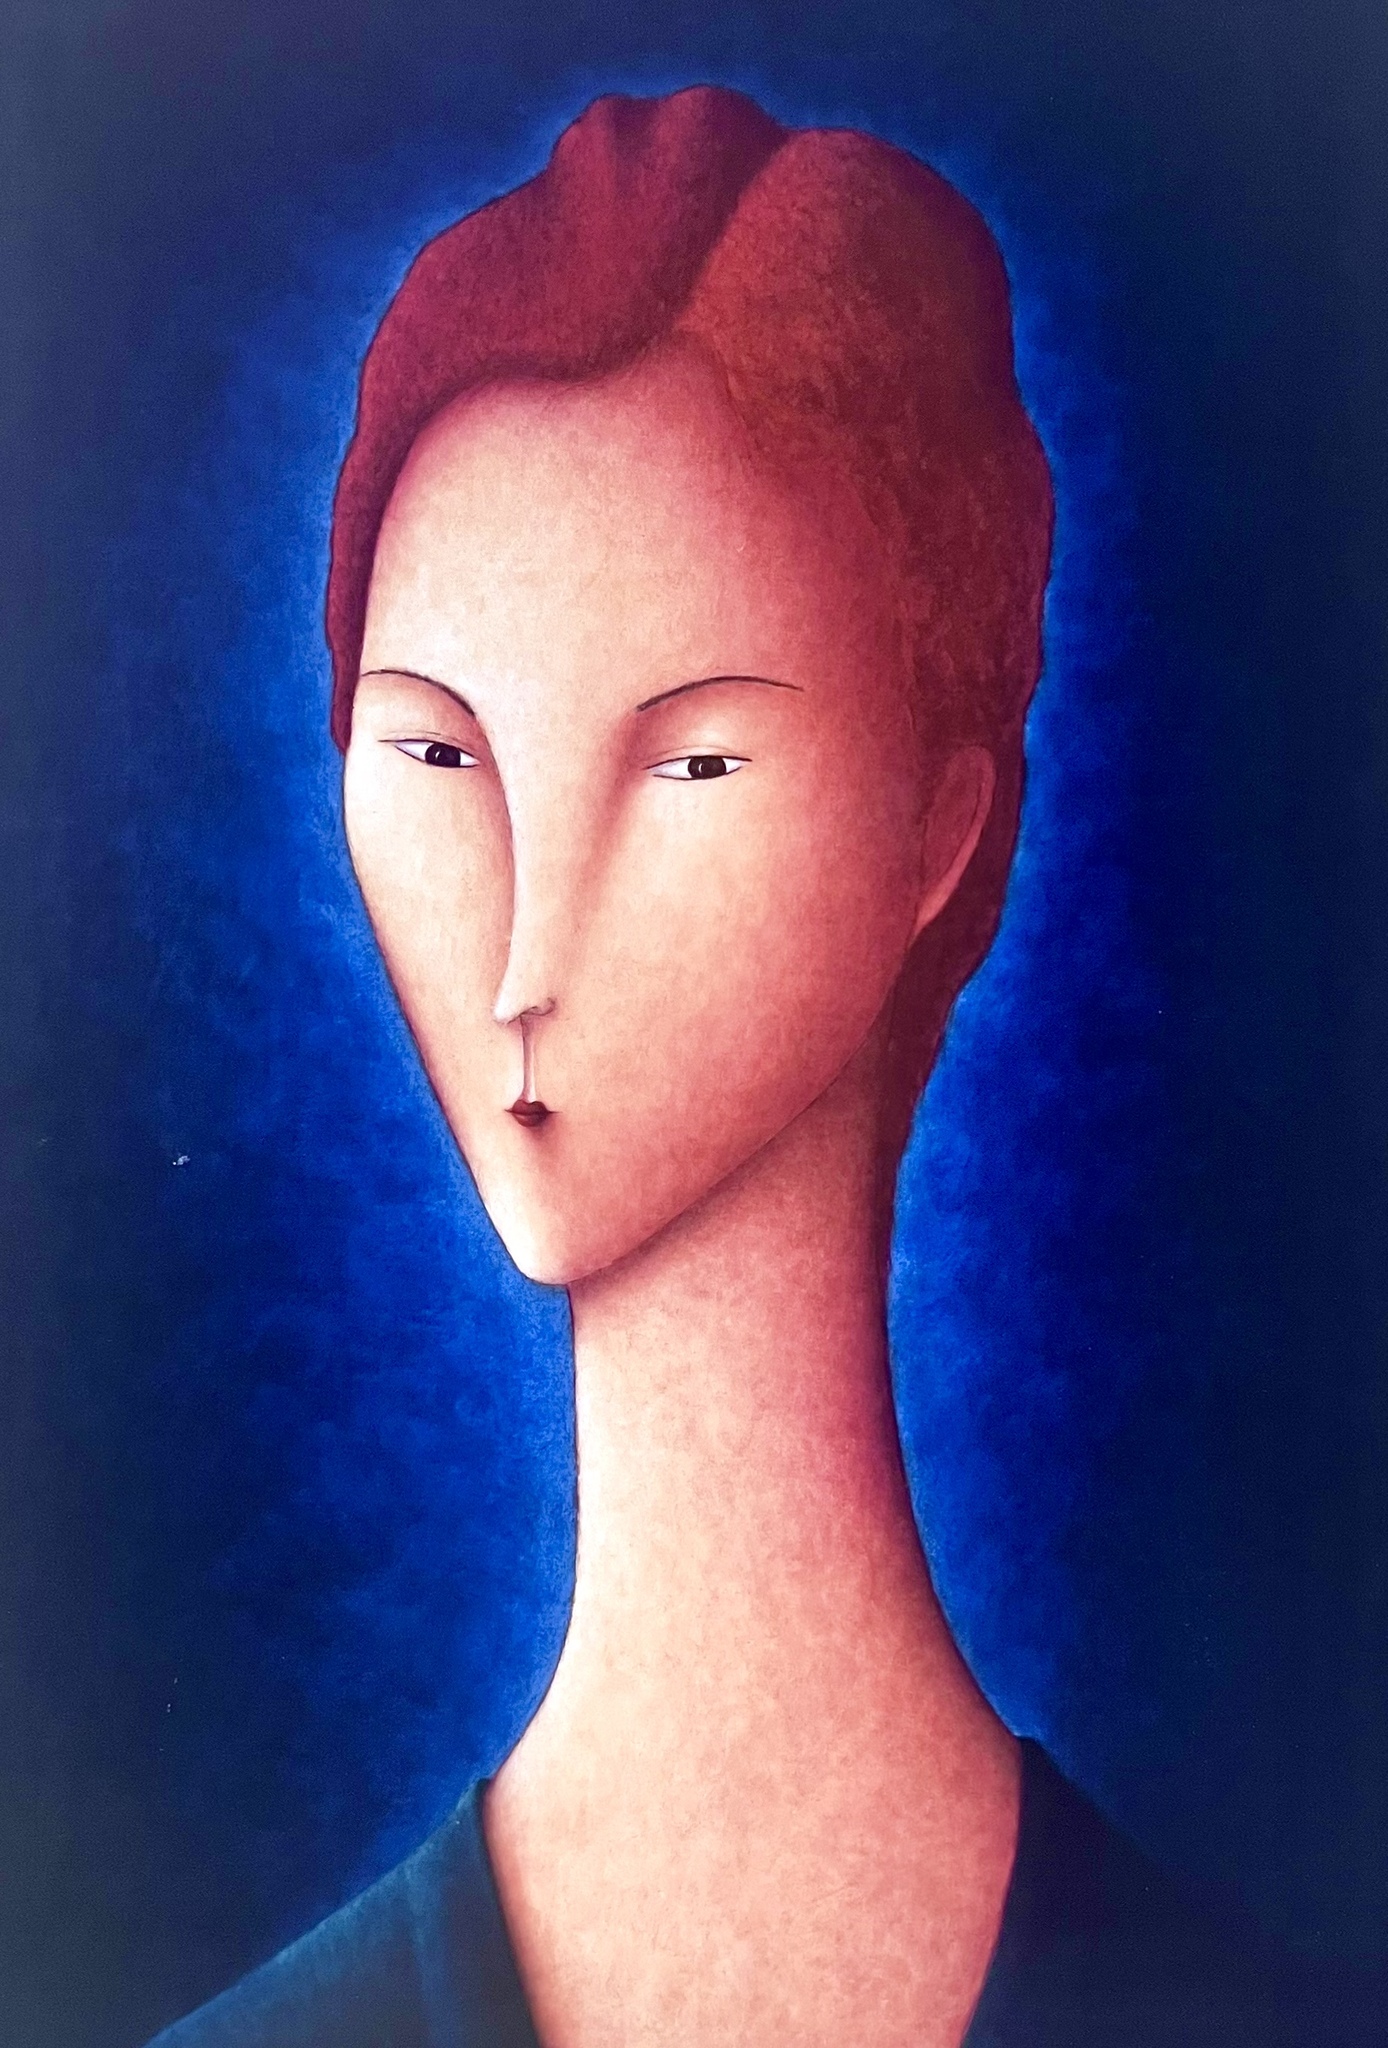 "Femme II" Litografi av Ralf Arzt 52,5x75 cm